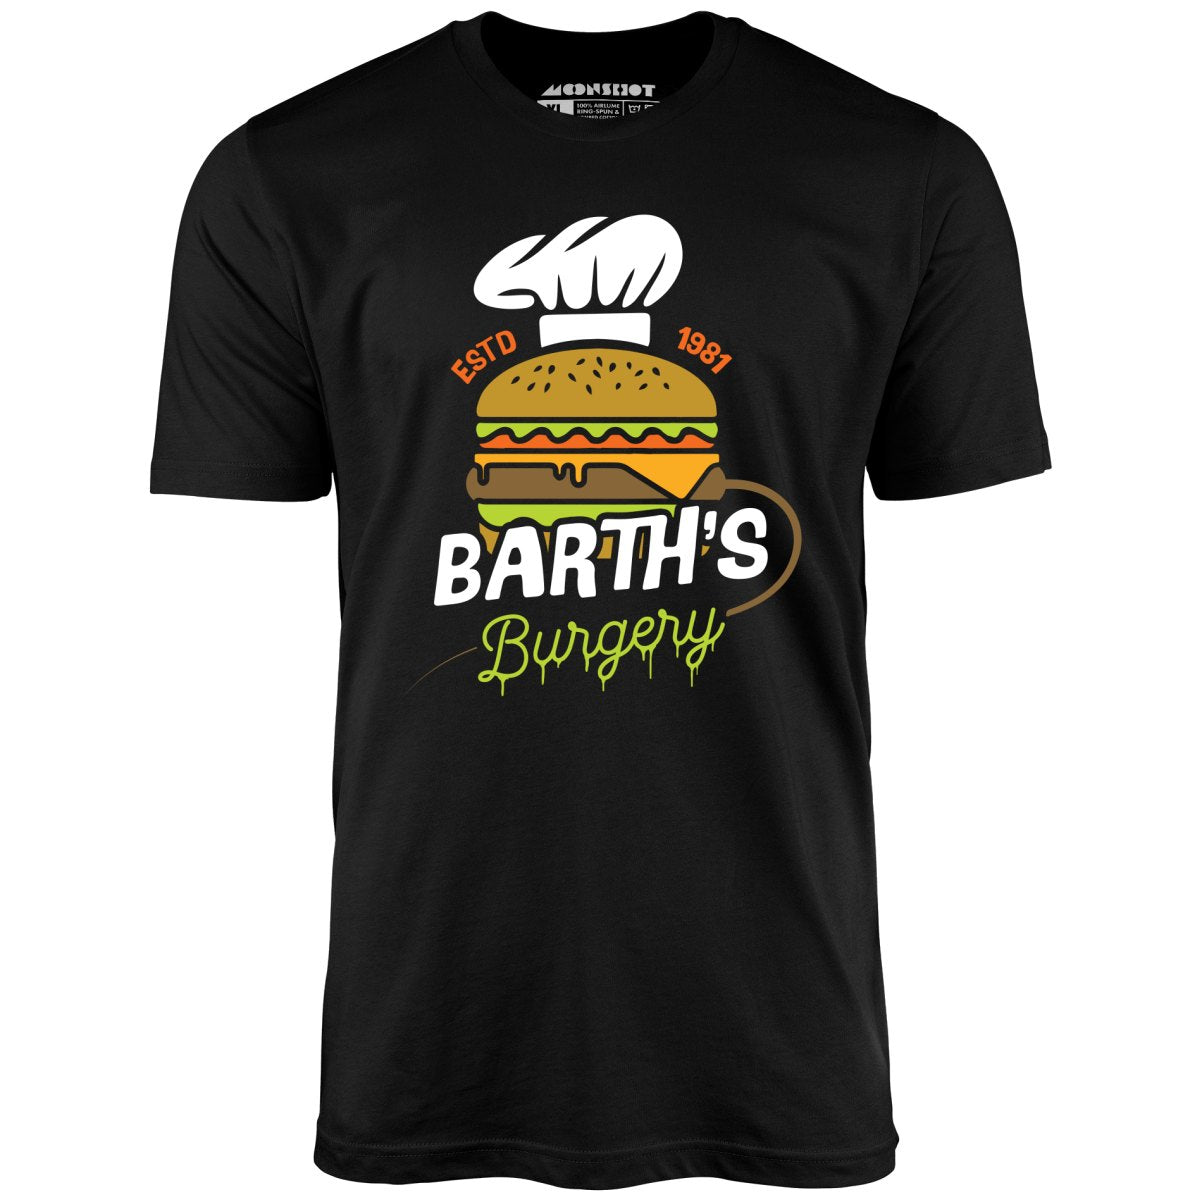 Barth's Burgery - Unisex T-Shirt